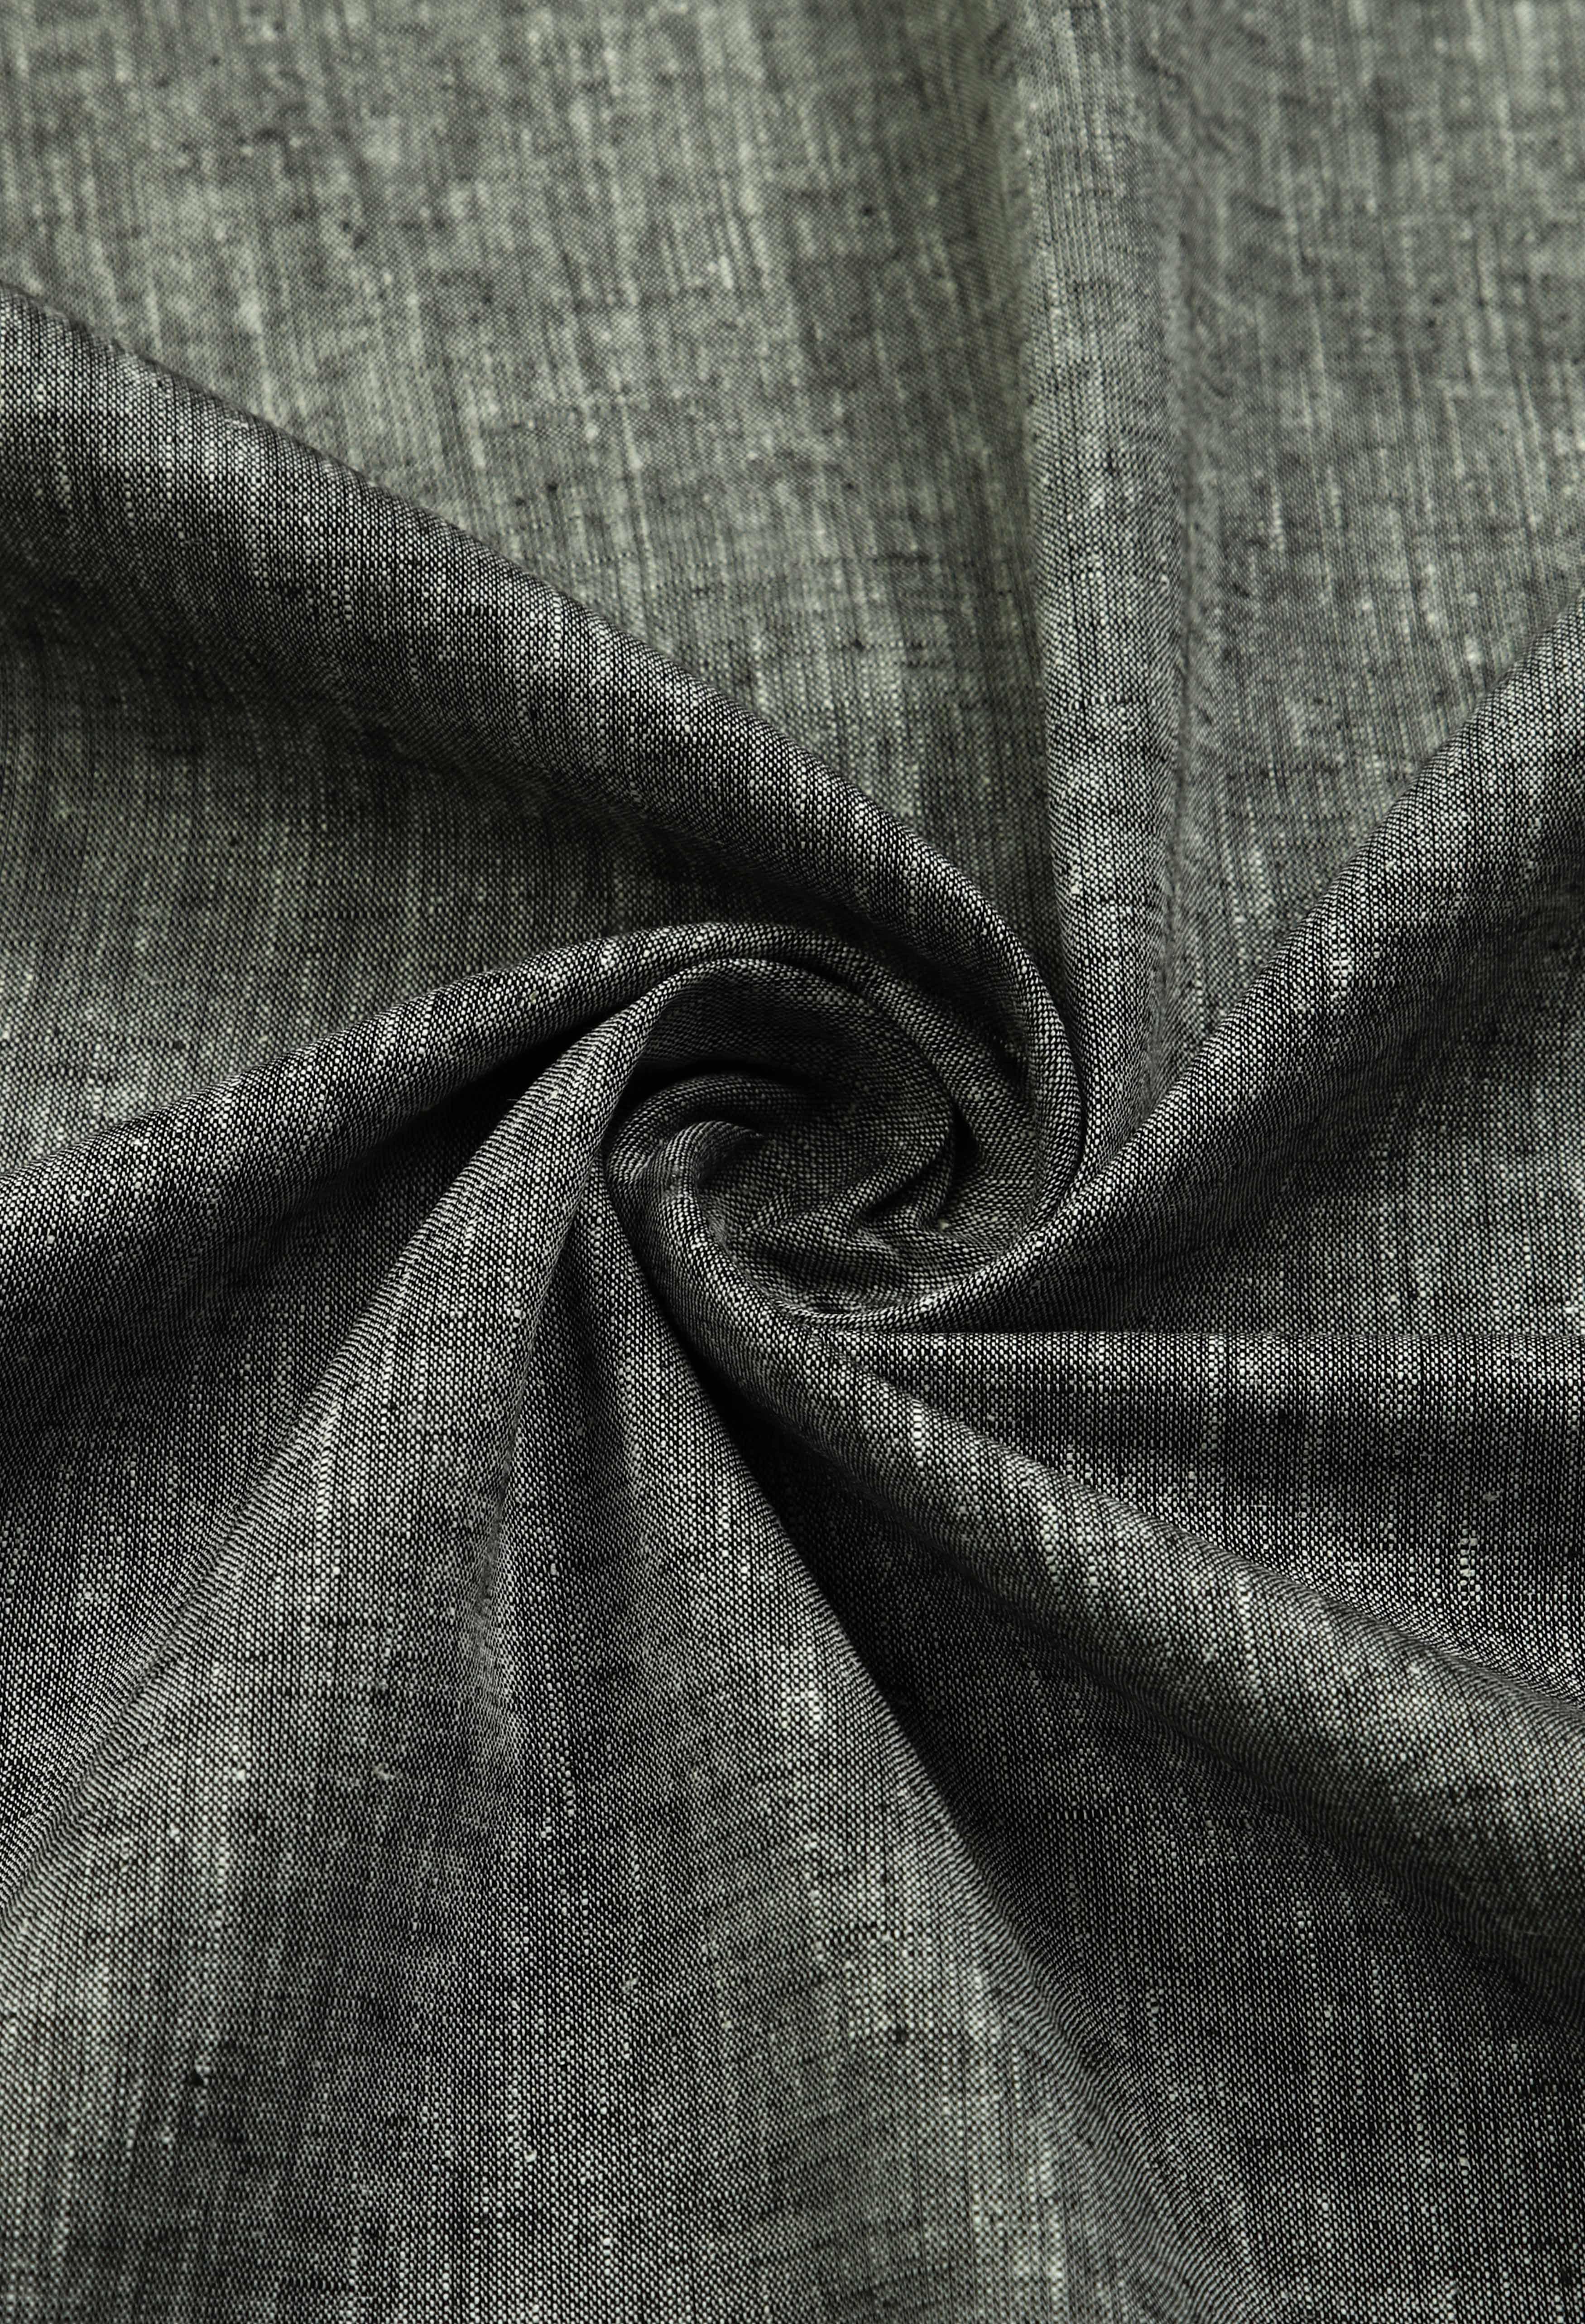 Charcoal Grey linen